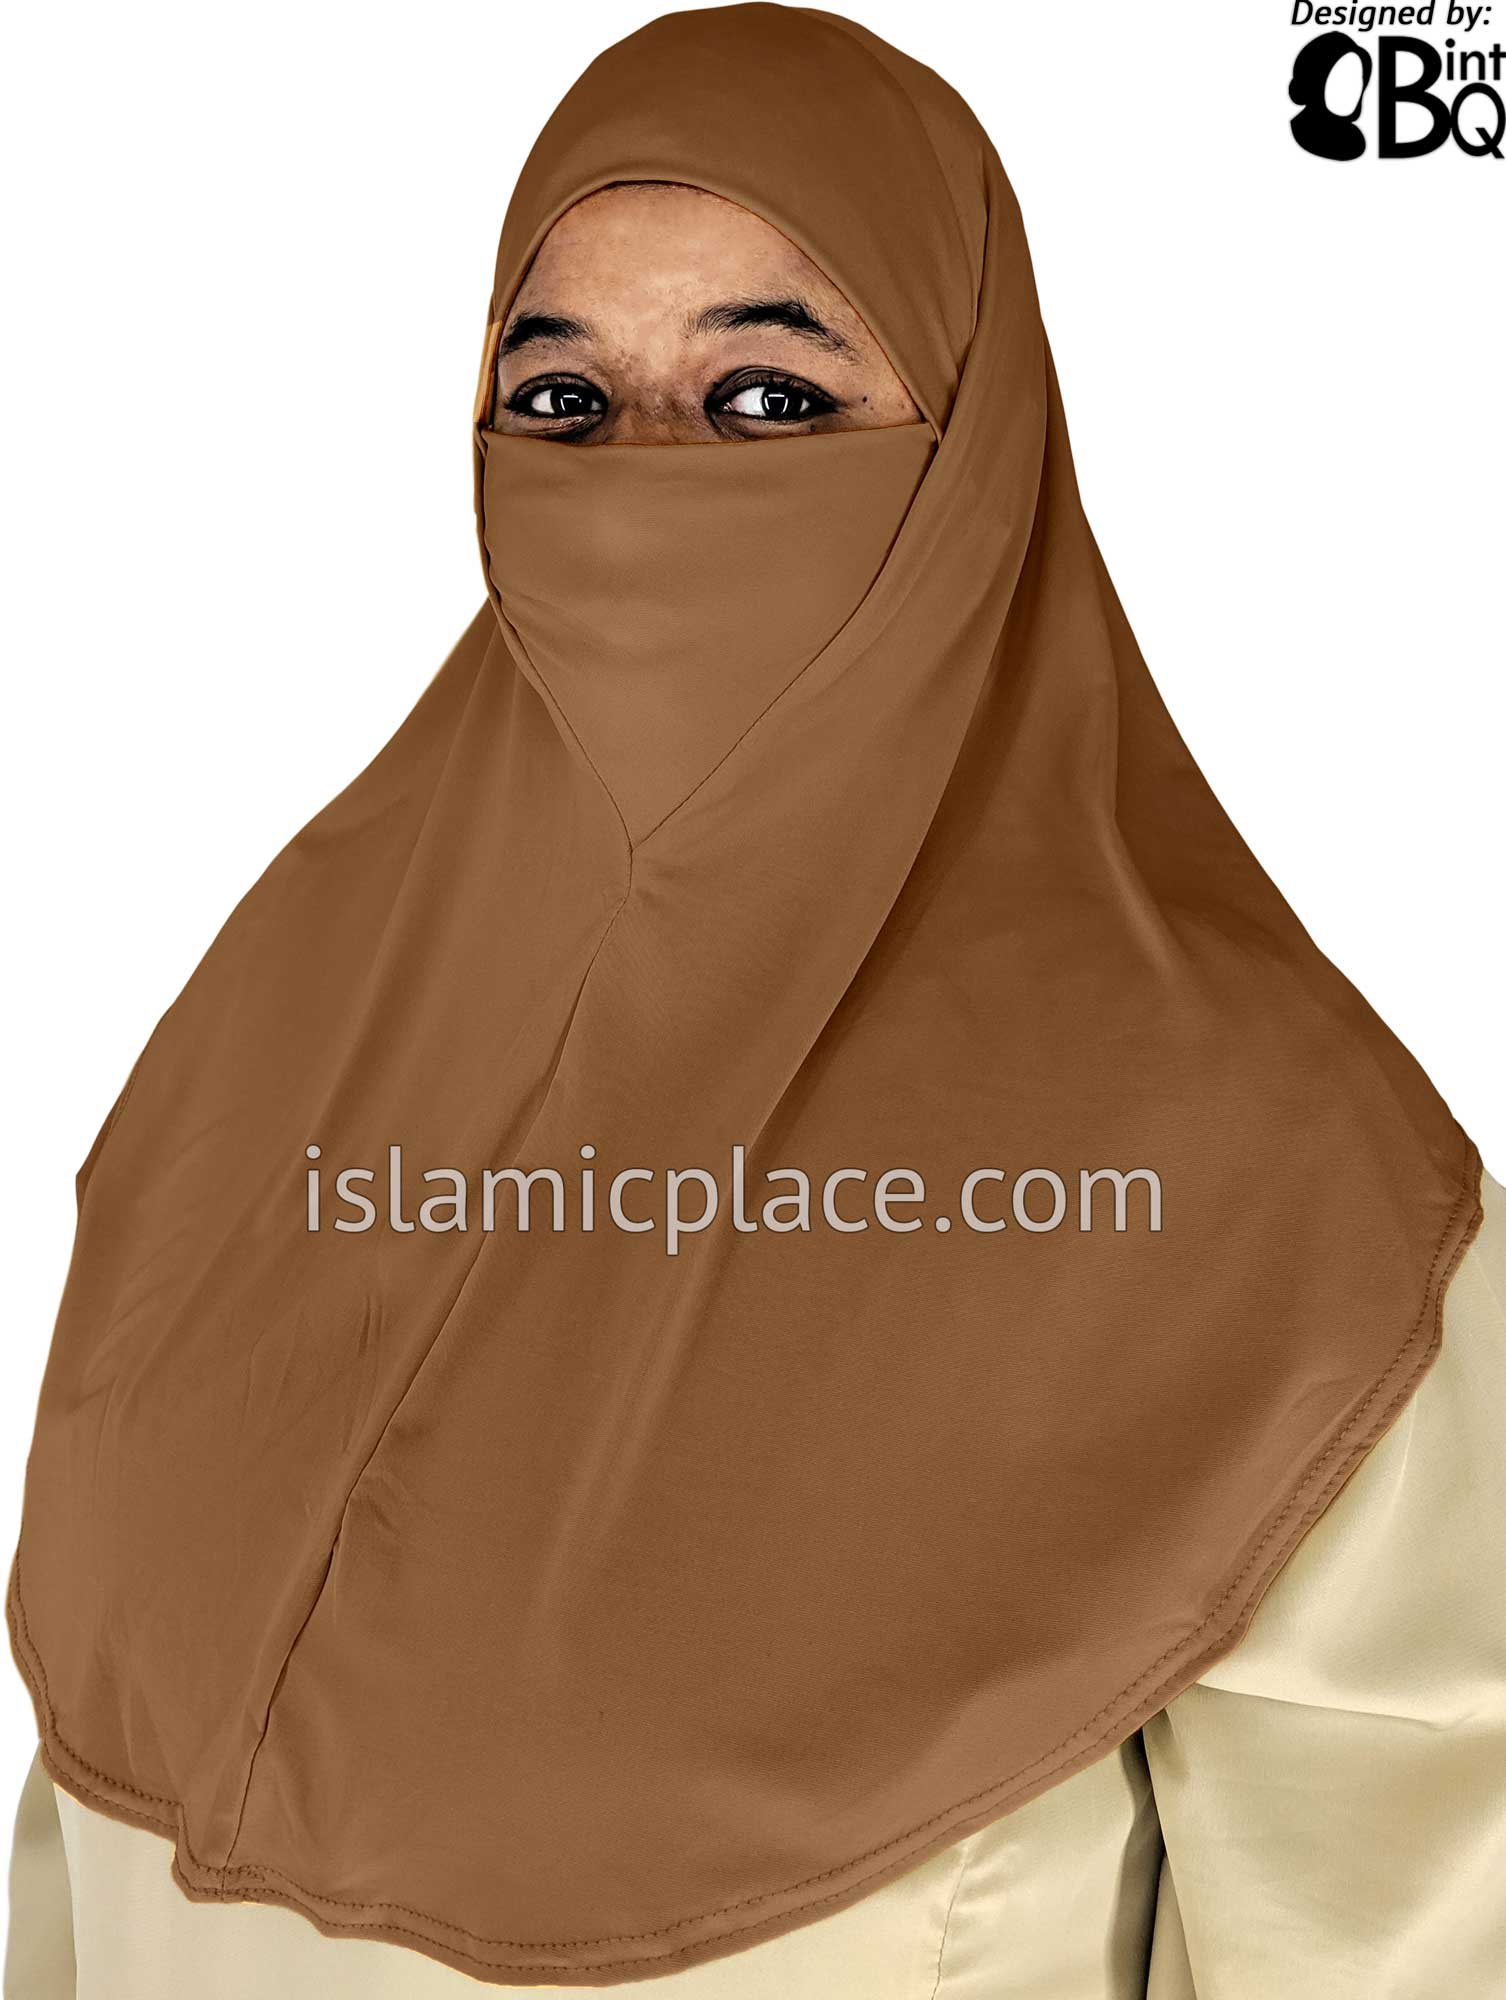 Hazelnut - Plain Teen to Adult (Large) Hijab Al-Amira with Built-in Niqab